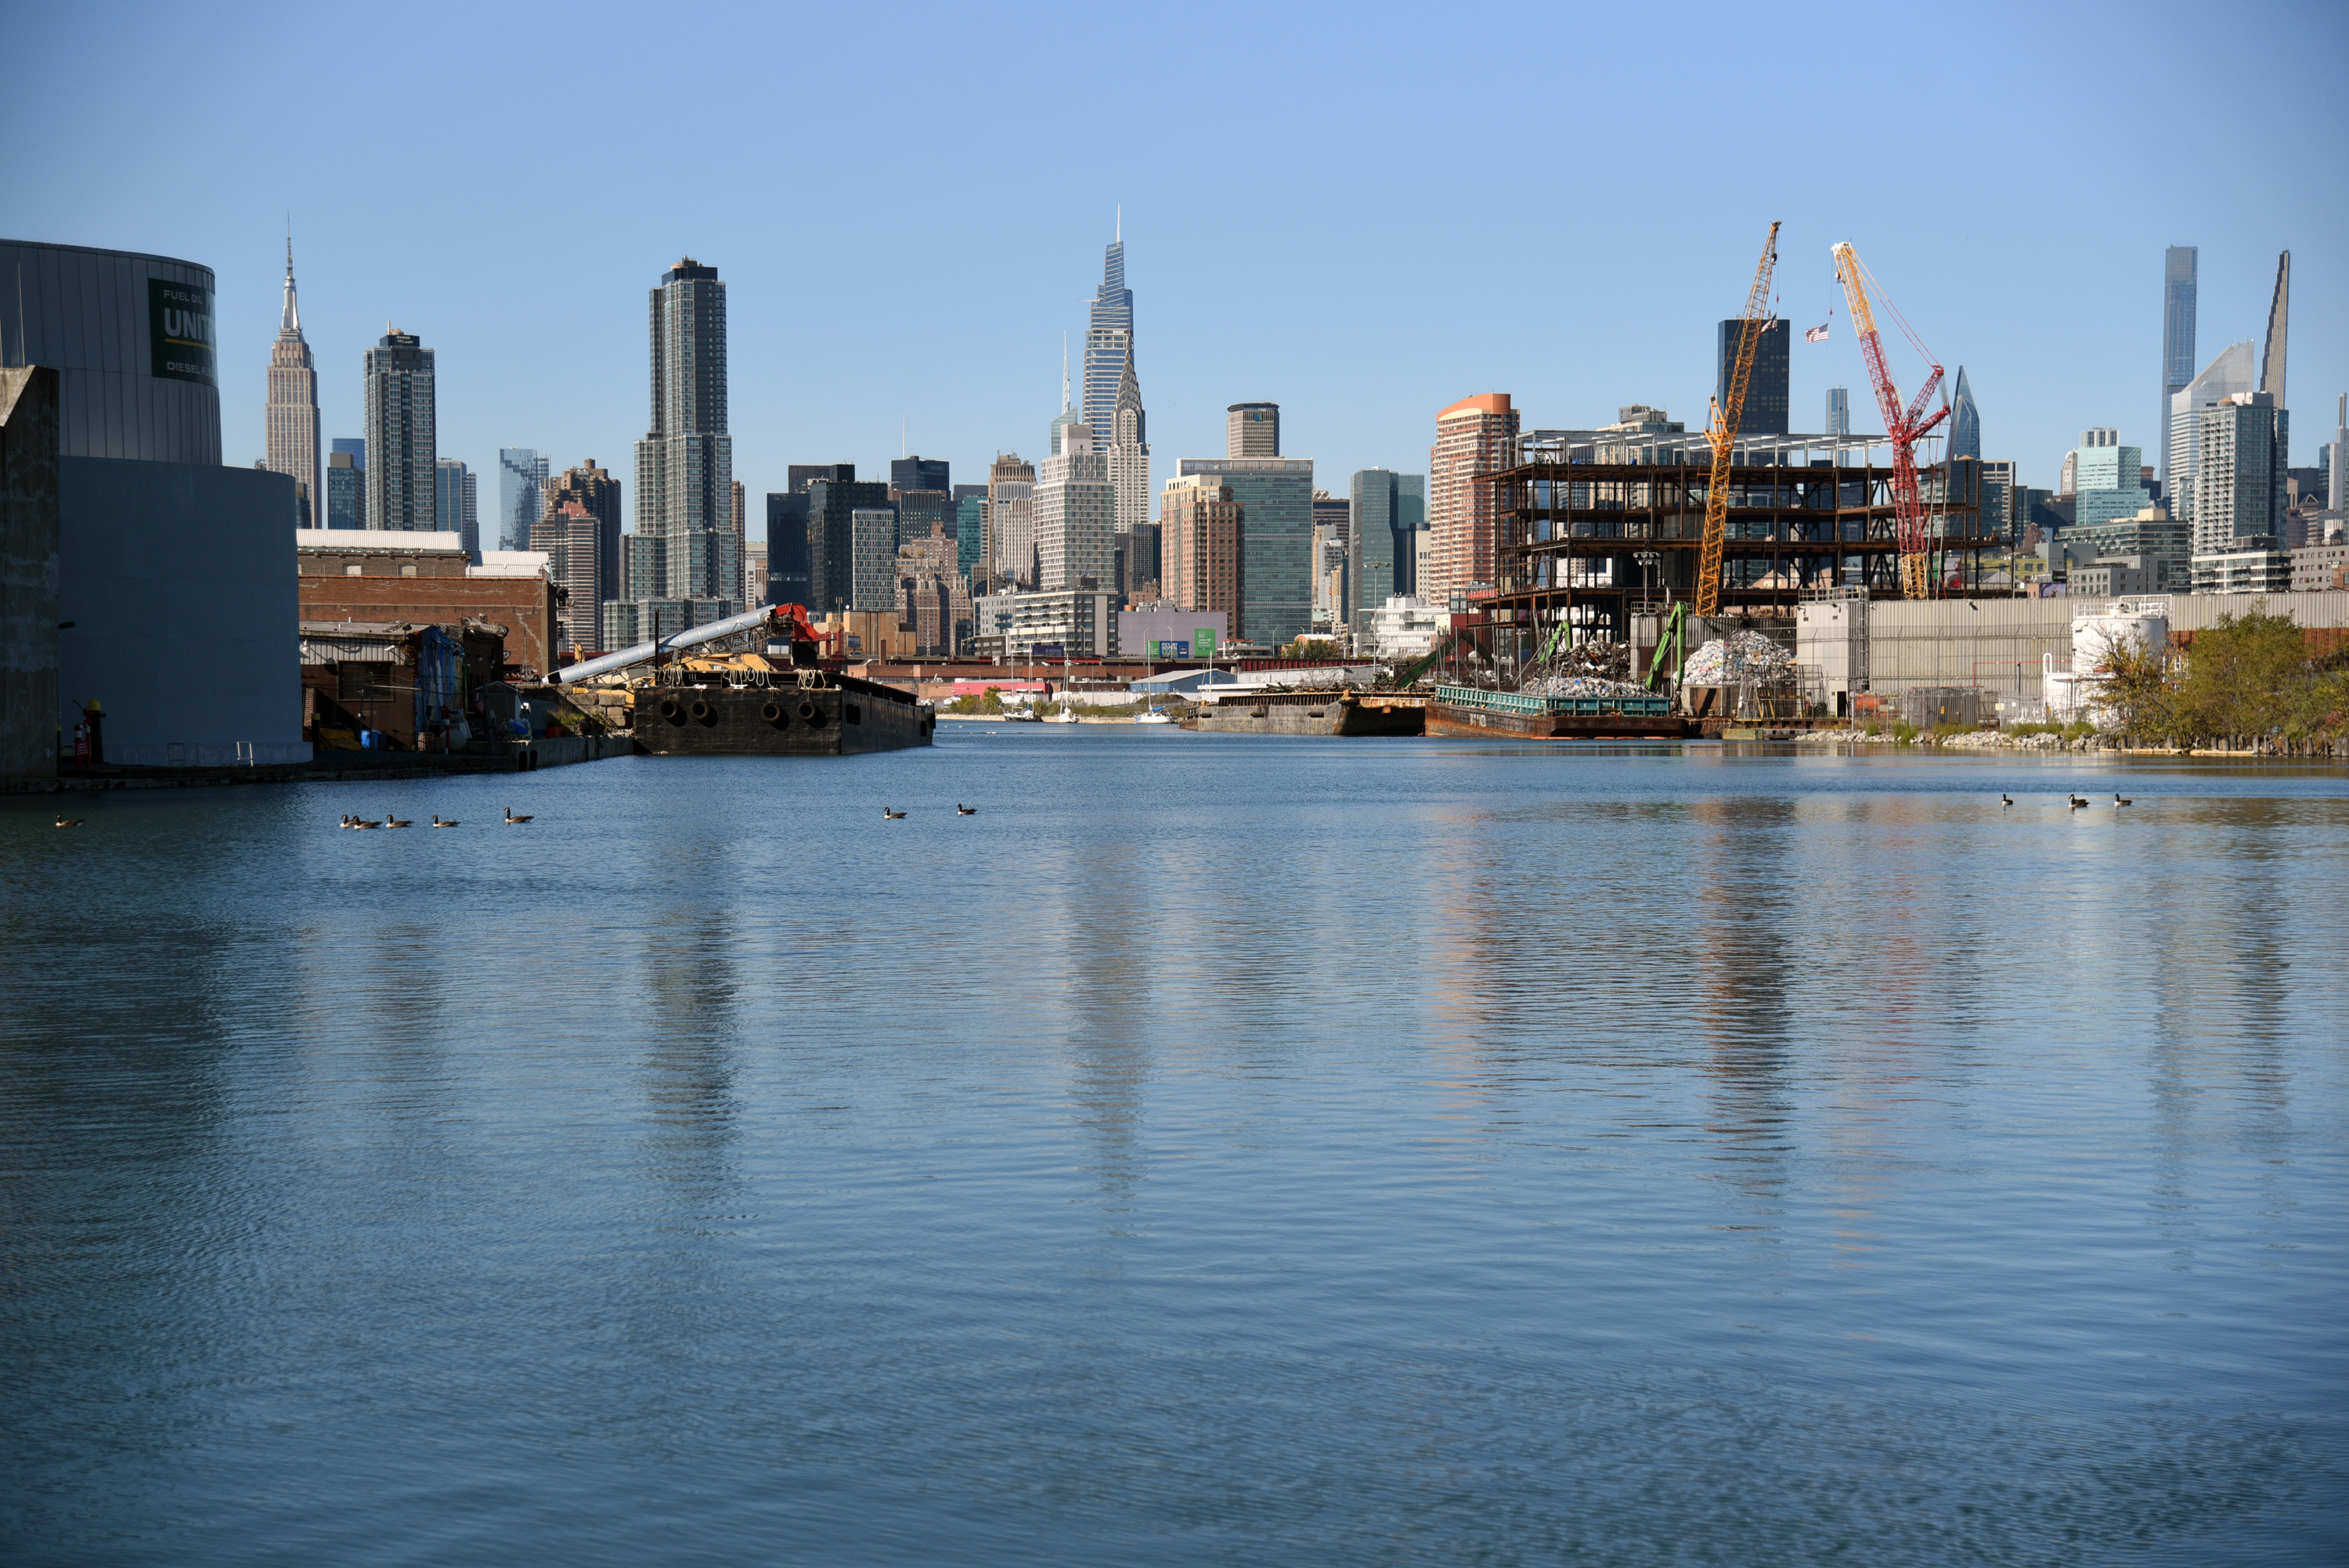 EPA cleanup of Brooklyn’s toxic Newtown Creek Superfund site
delayed until 2032